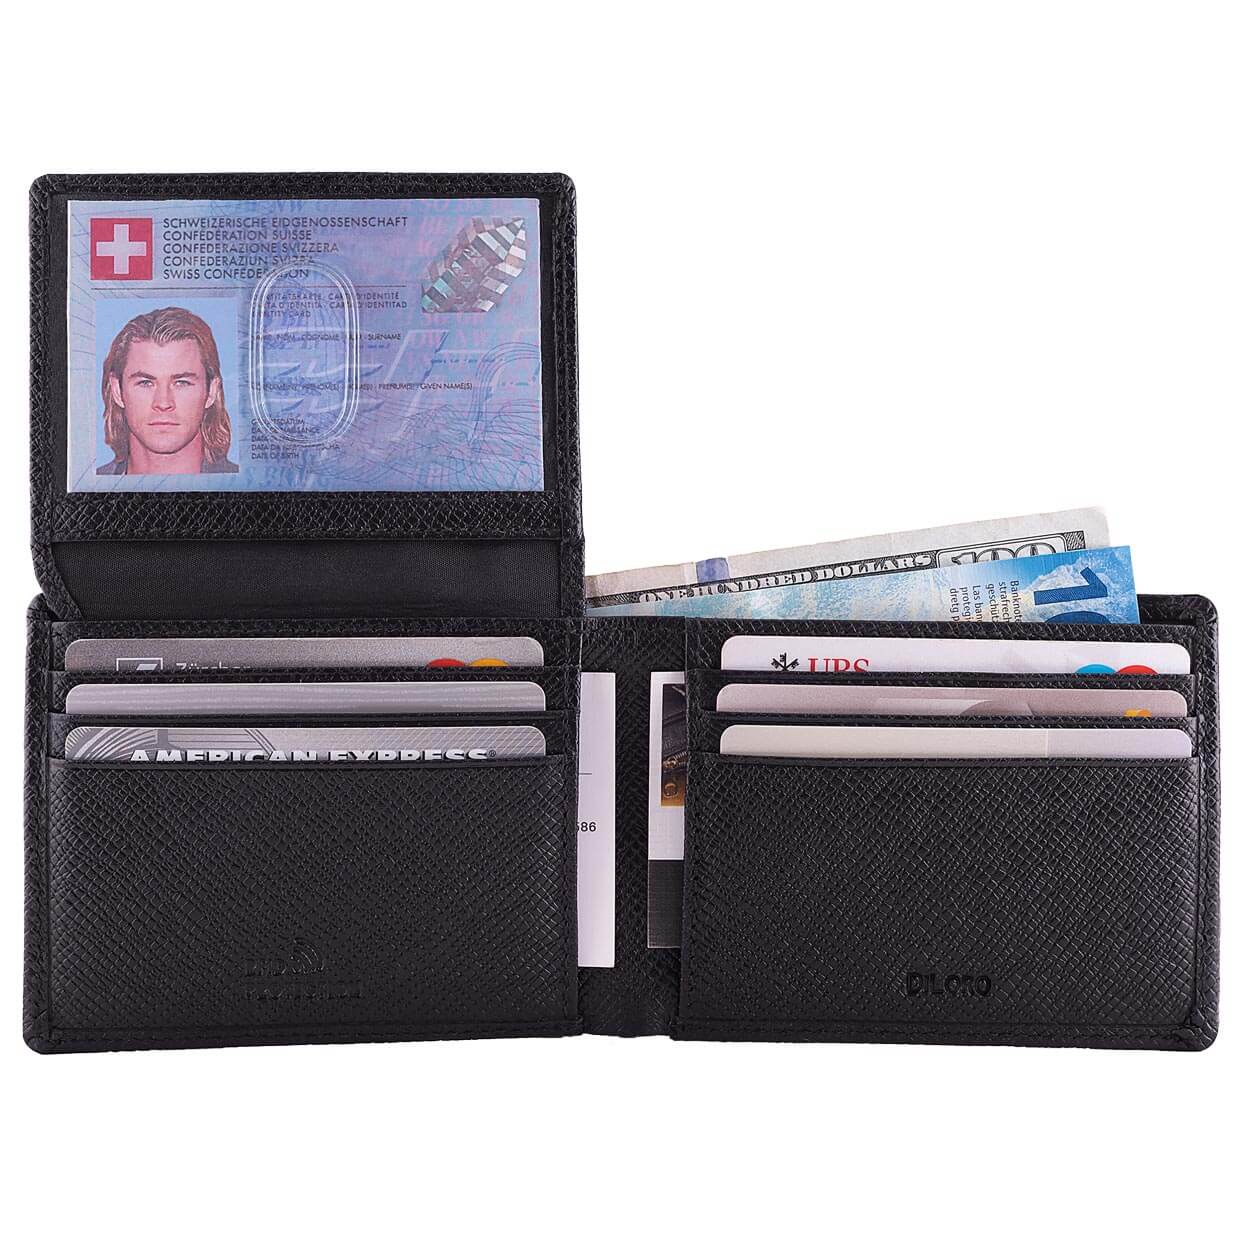  Mens Wallet, RFID Blocking Made of Genuine Leather